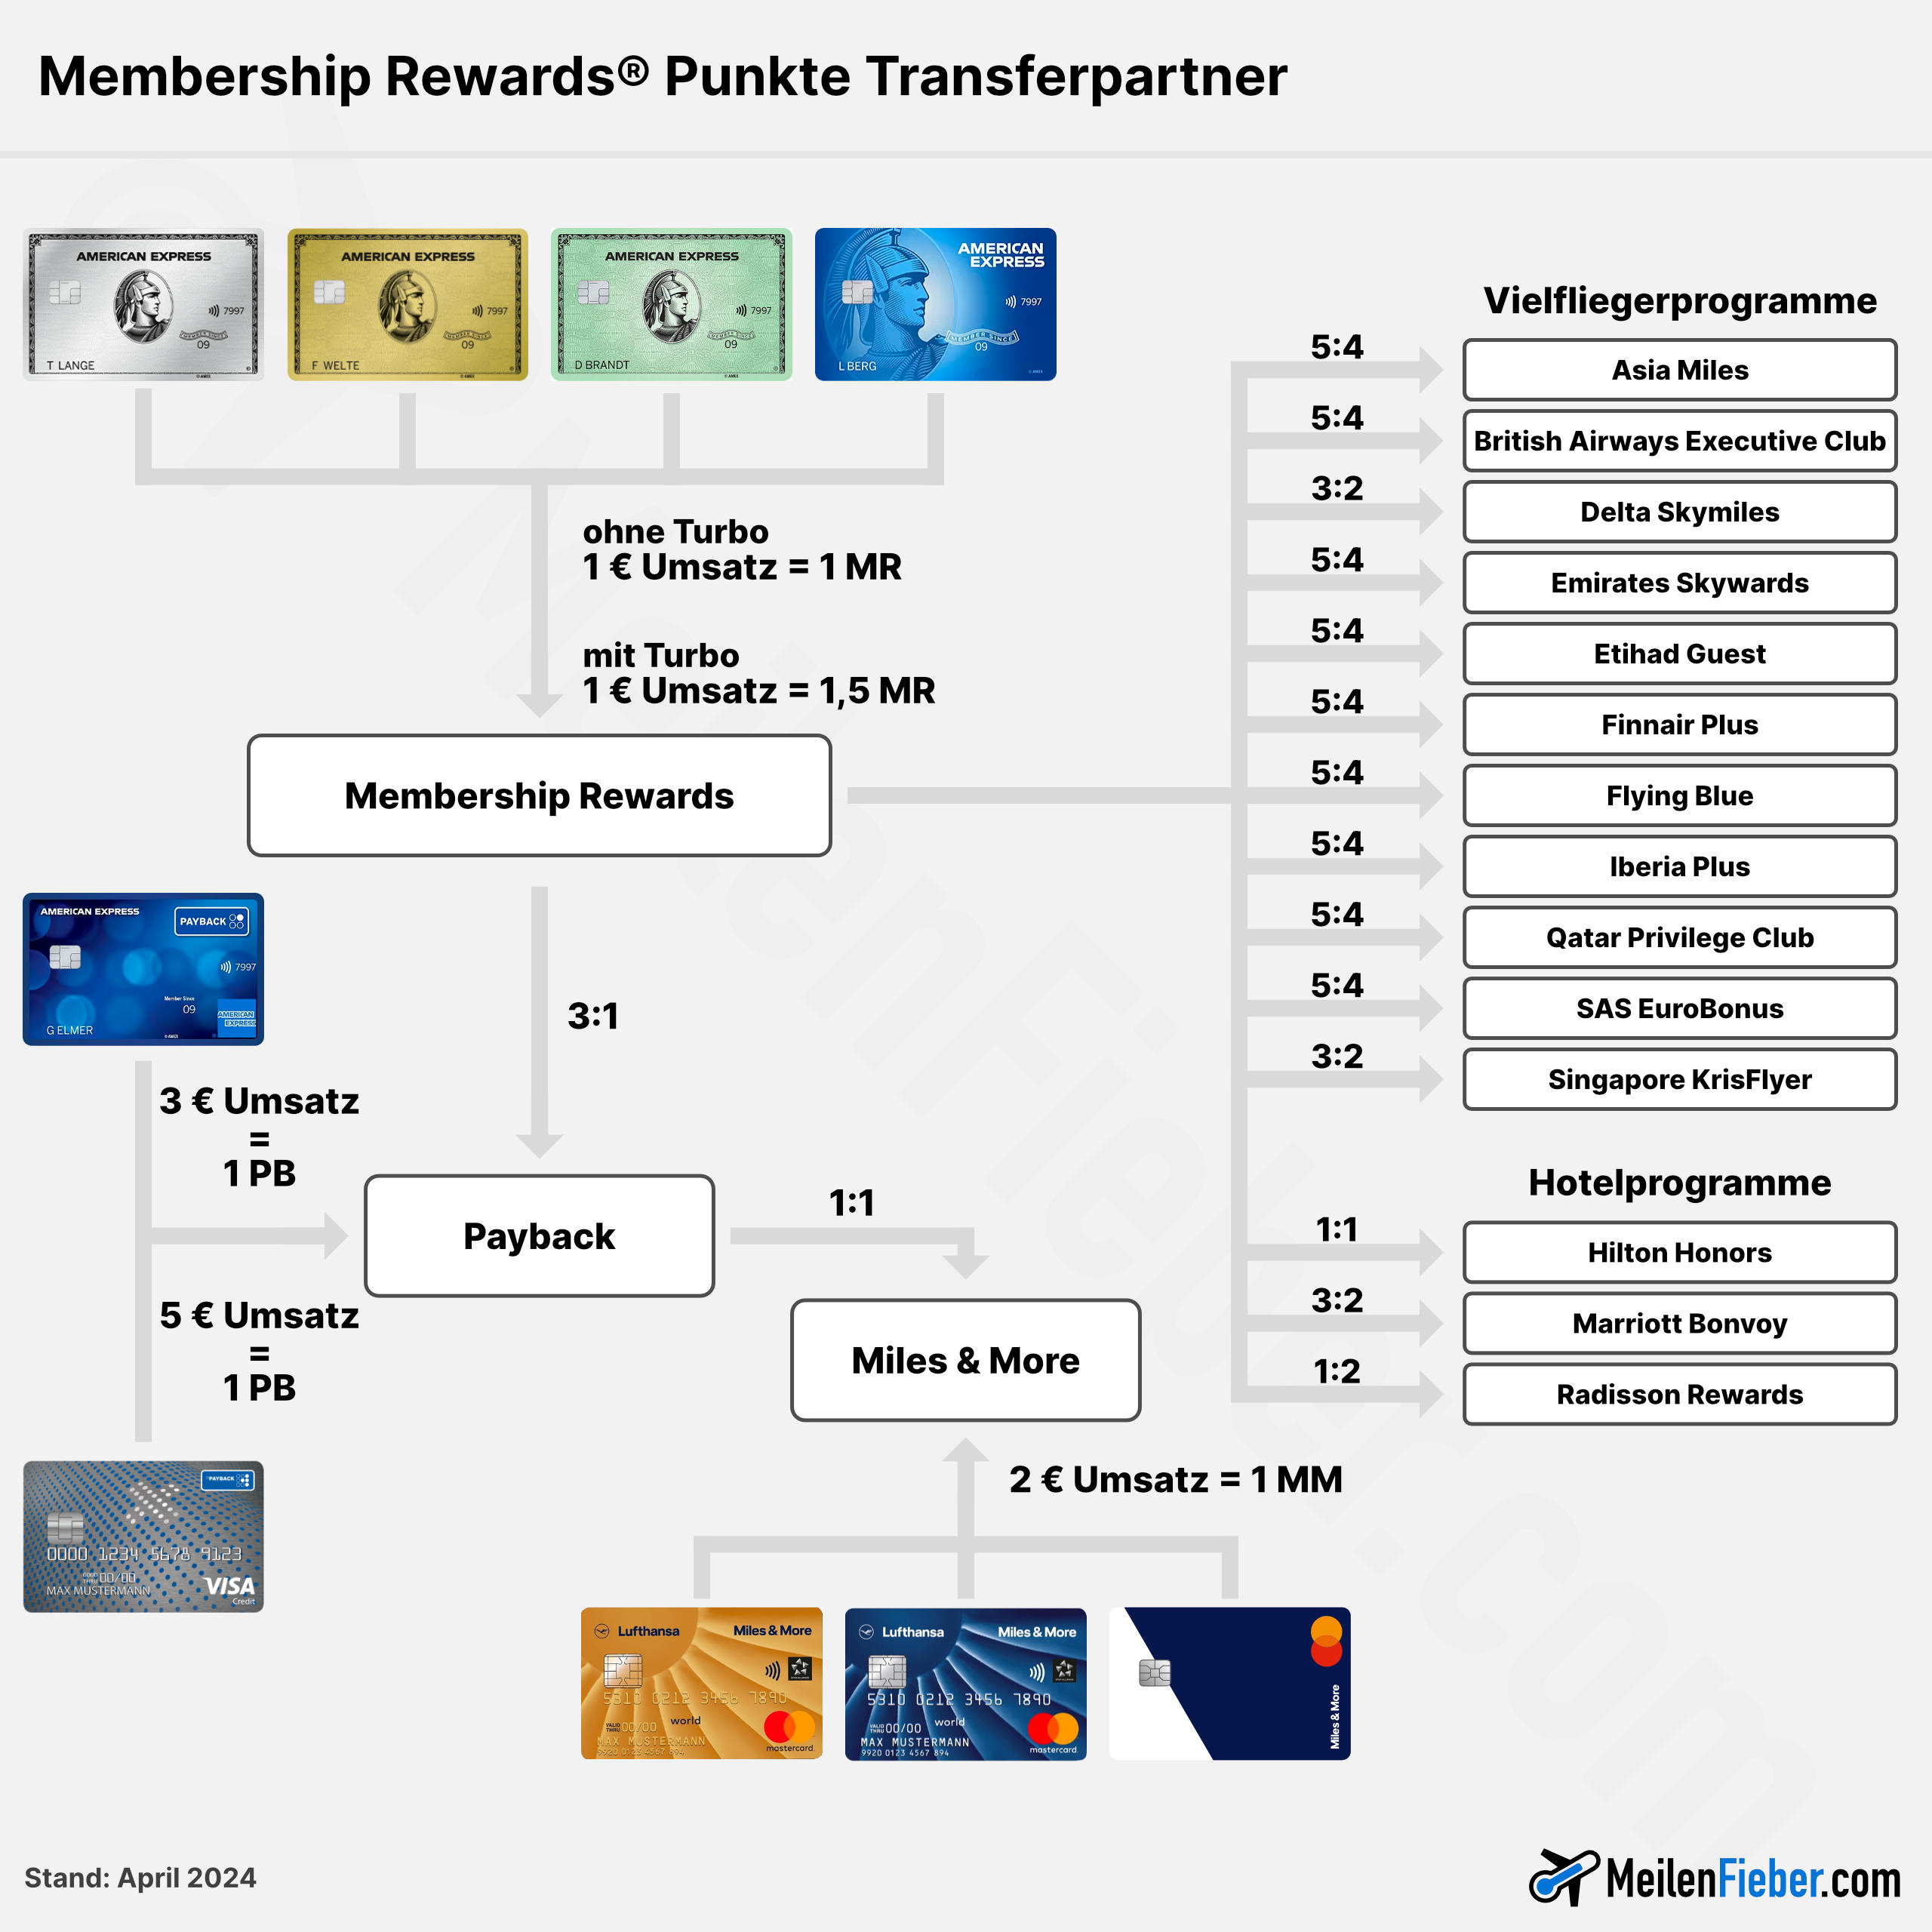 American Express® Membership Rewards® Transferpartner